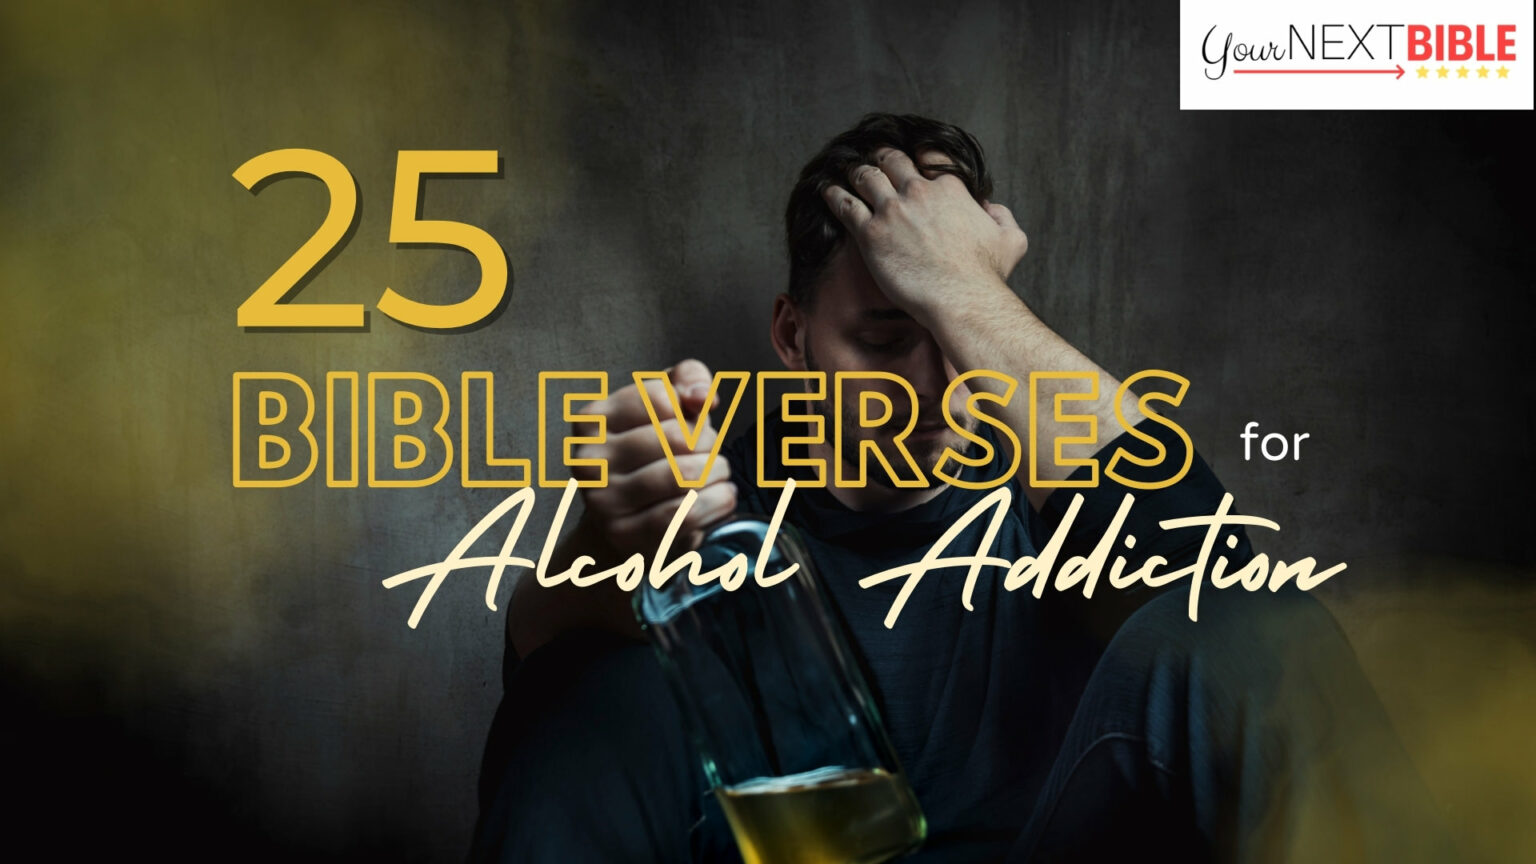 25-bible-verses-for-alcohol-addiction-your-next-bible